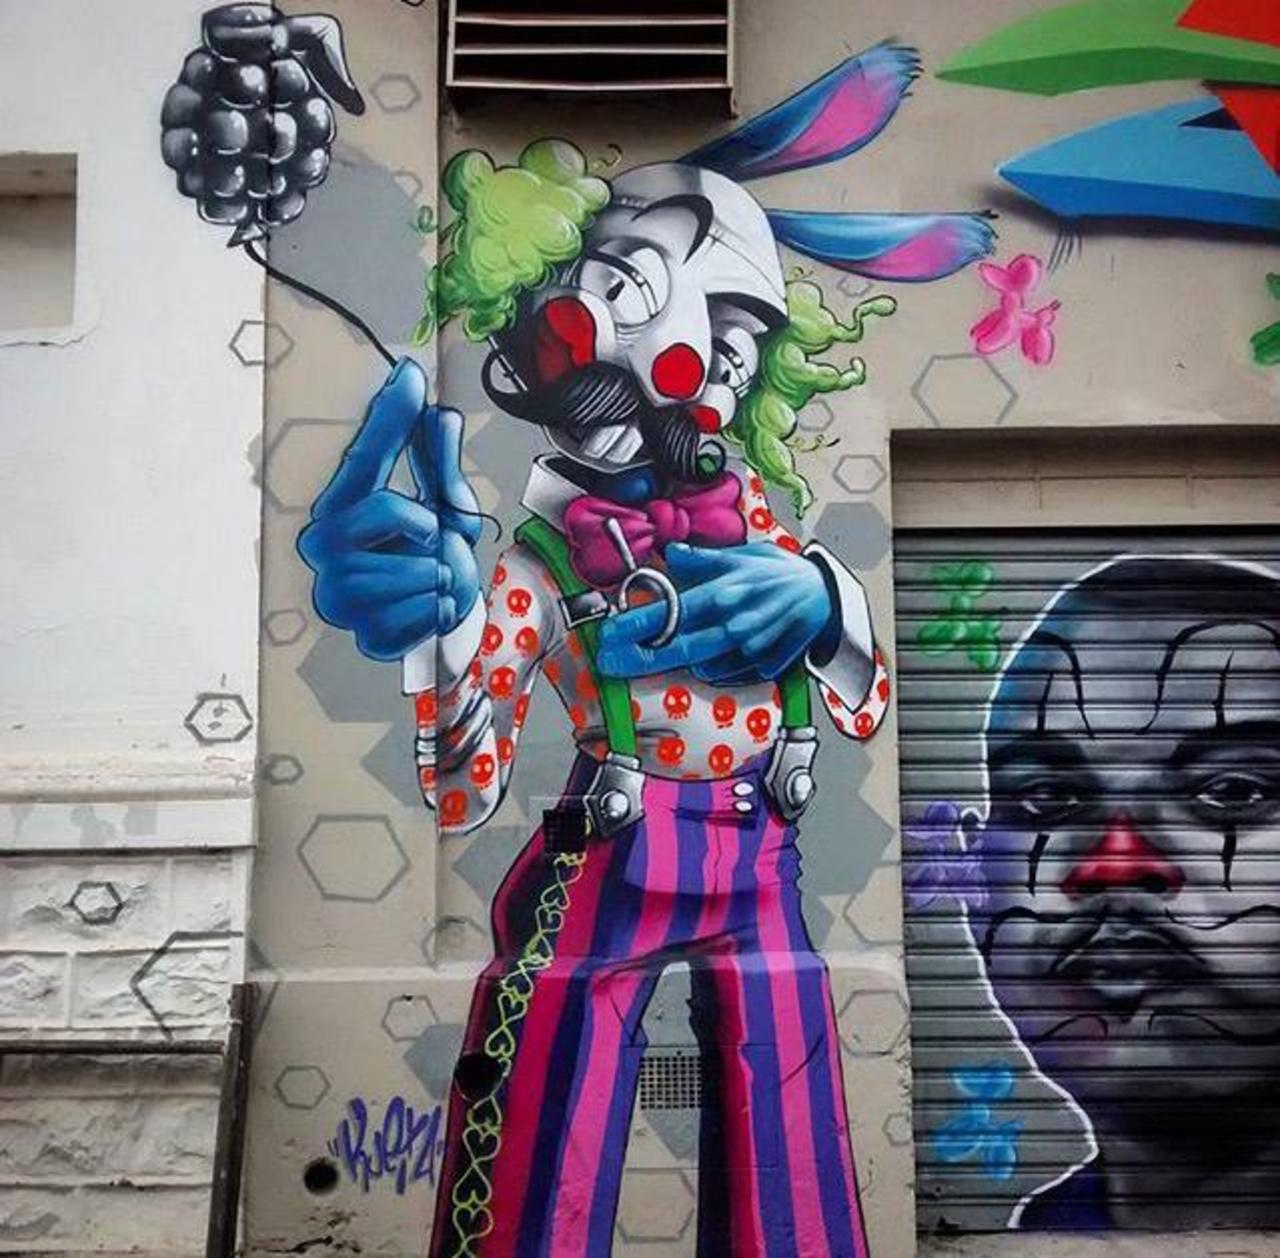 New tumblr post: "New Street Art by Karen Kueia 

#art #graffiti #mural #streetart http://t.co/6rDsBaCgOG" http://ift.tt/1jvL6A7 , IFTT…